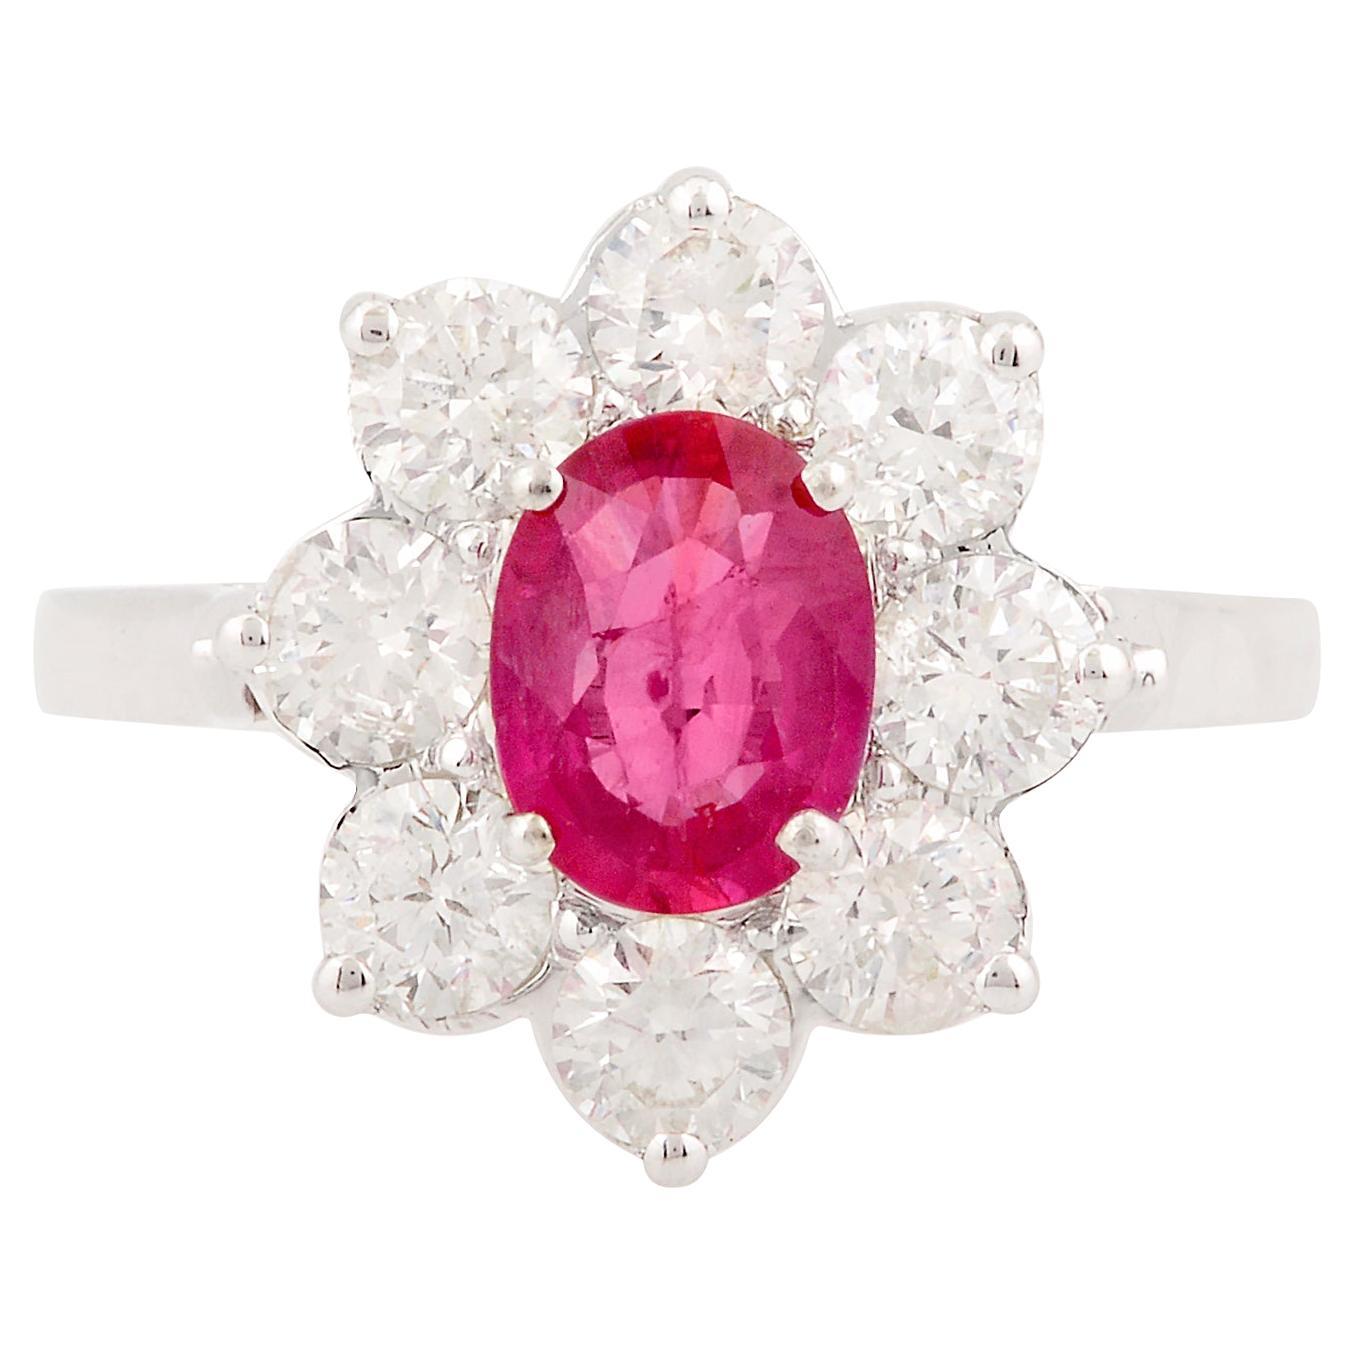 Oval Ruby Gemstone Flower Ring SI Clarity HI Color Diamond 14 Karat White Gold